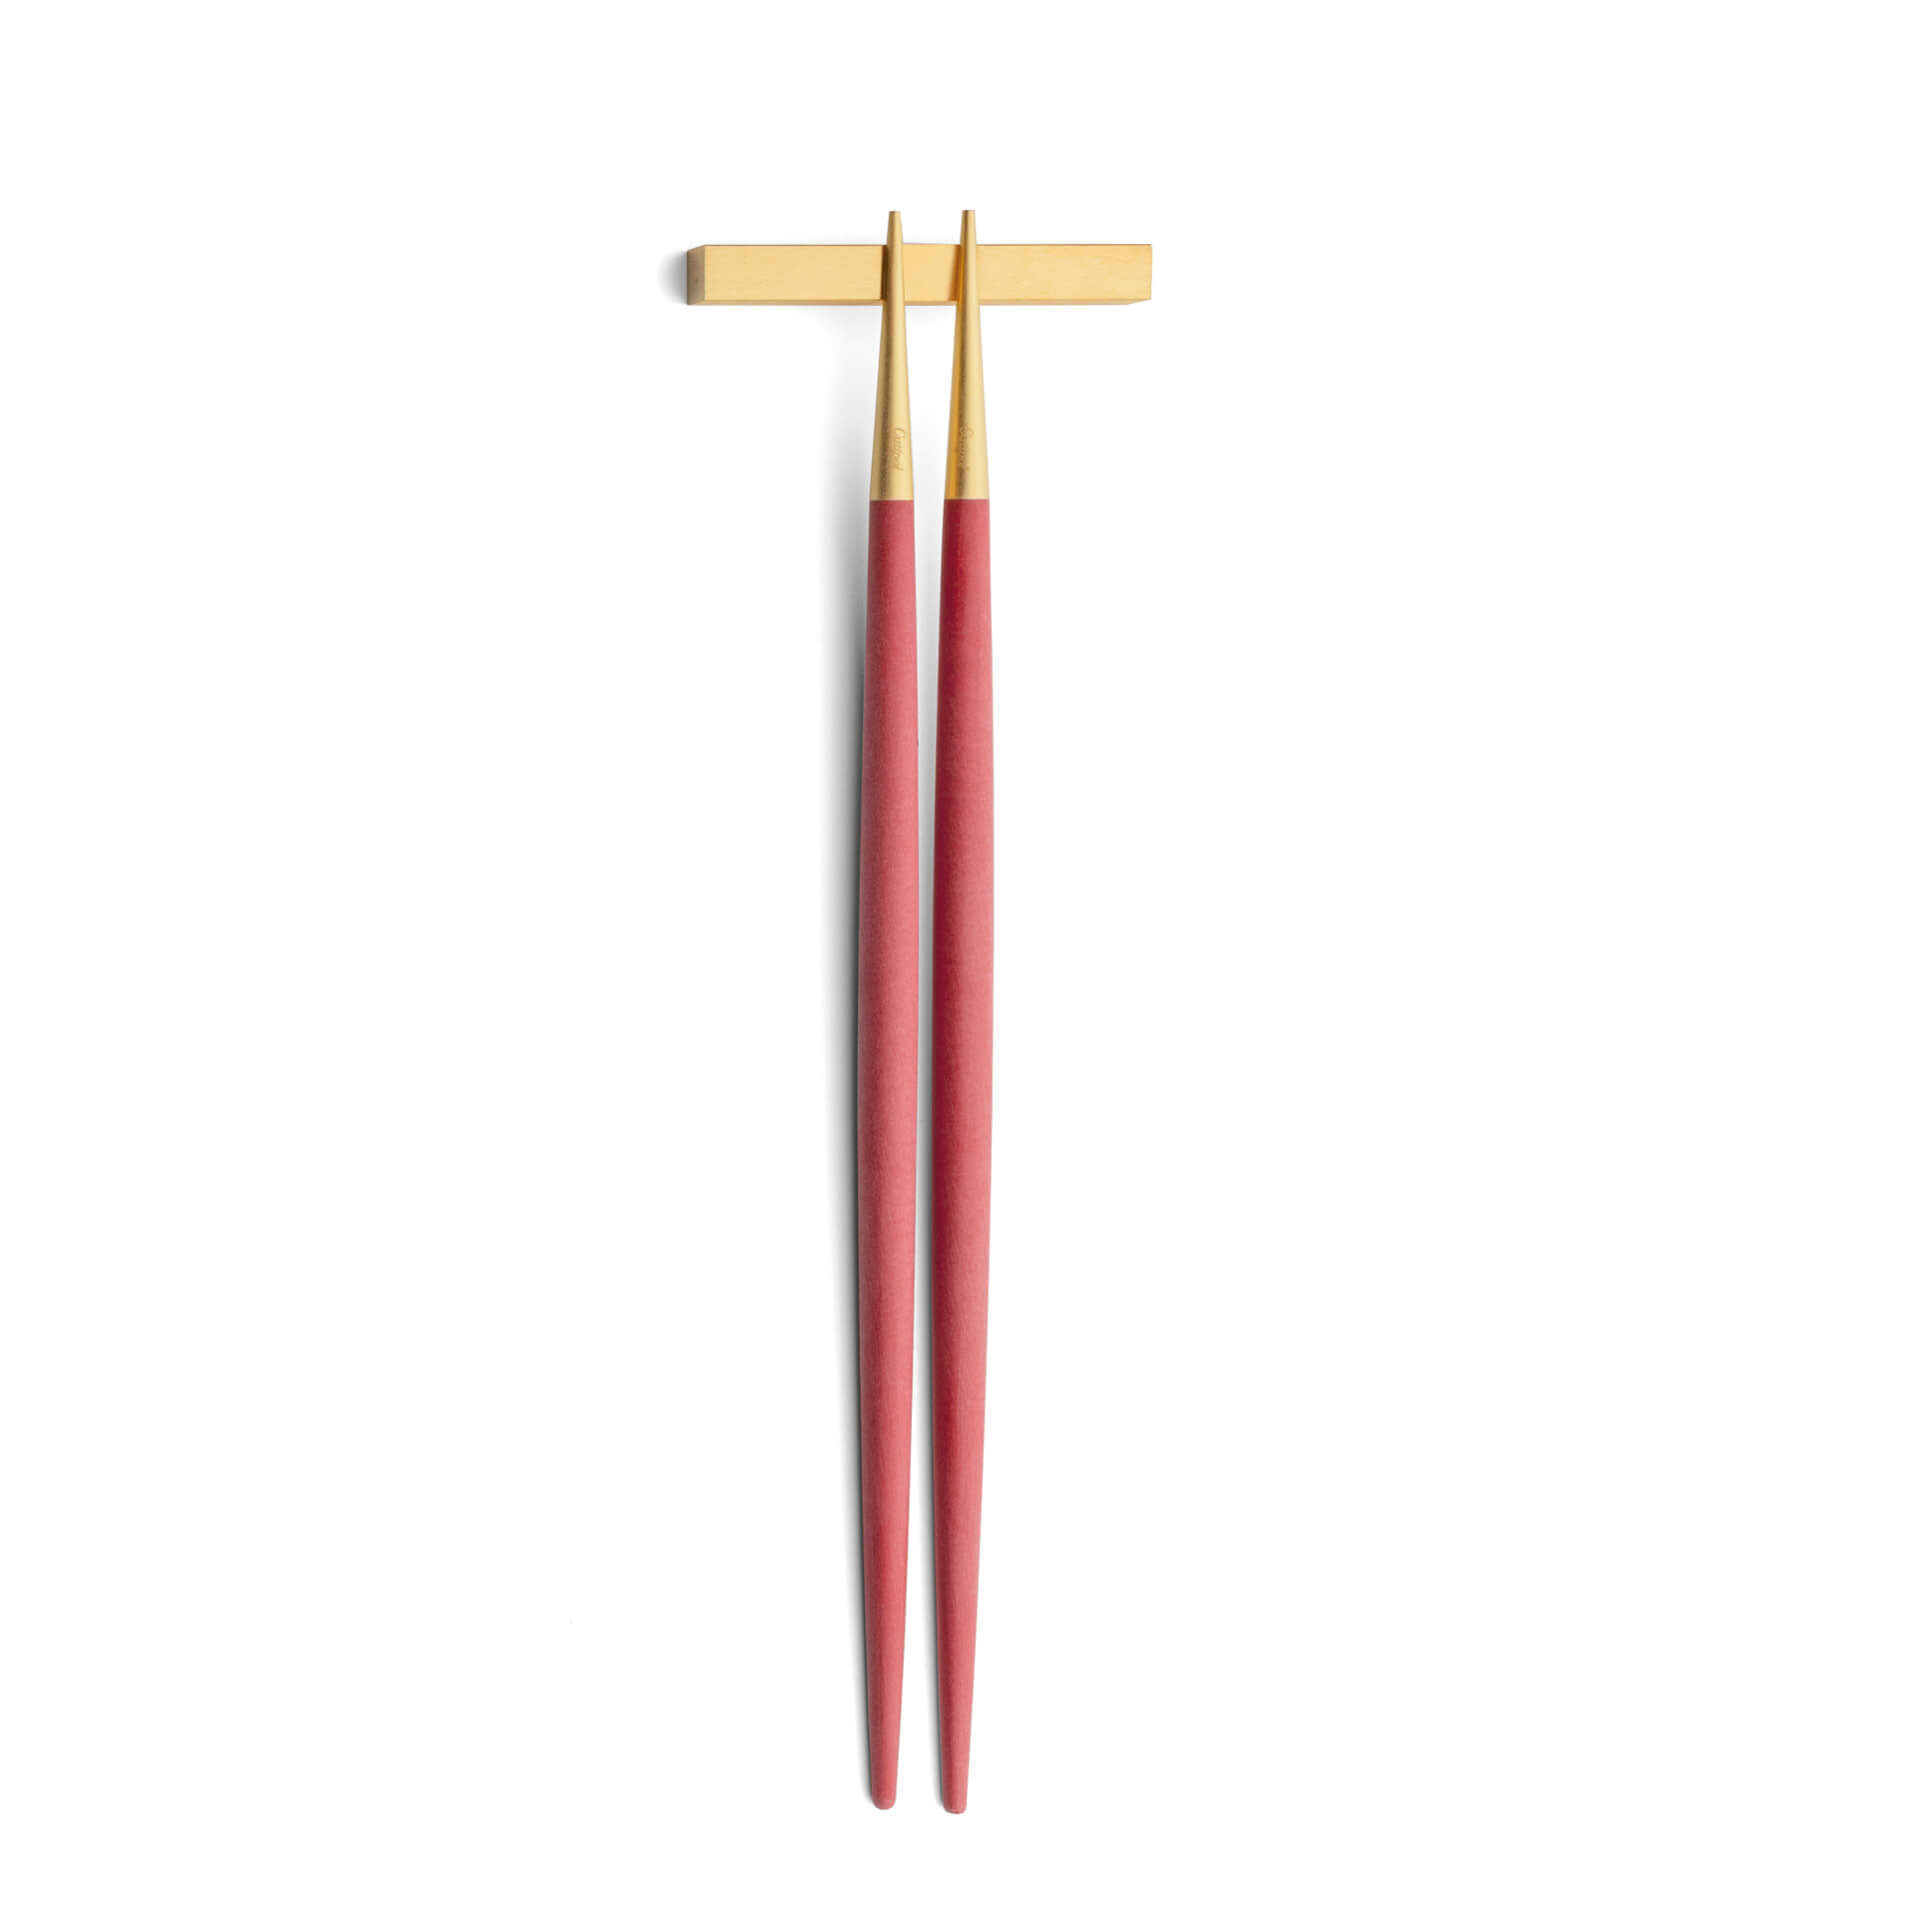 Cutipol Goa Red Gold chopstick set and support